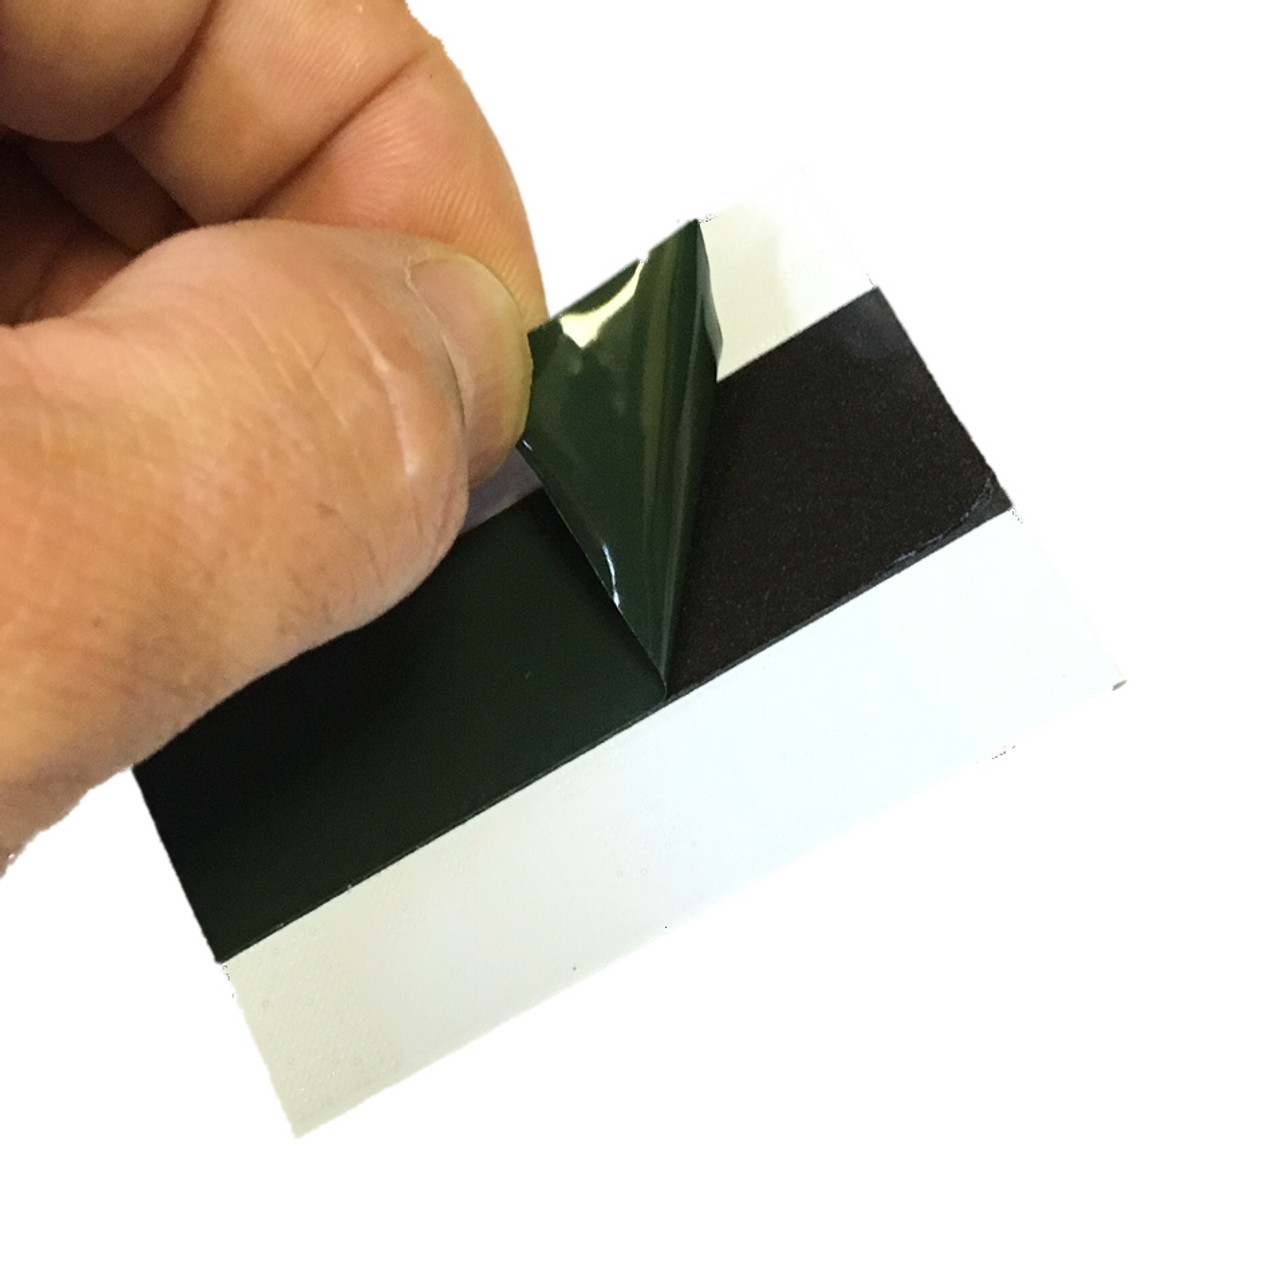 Hi-Bond Industrial adhesive tape on back side